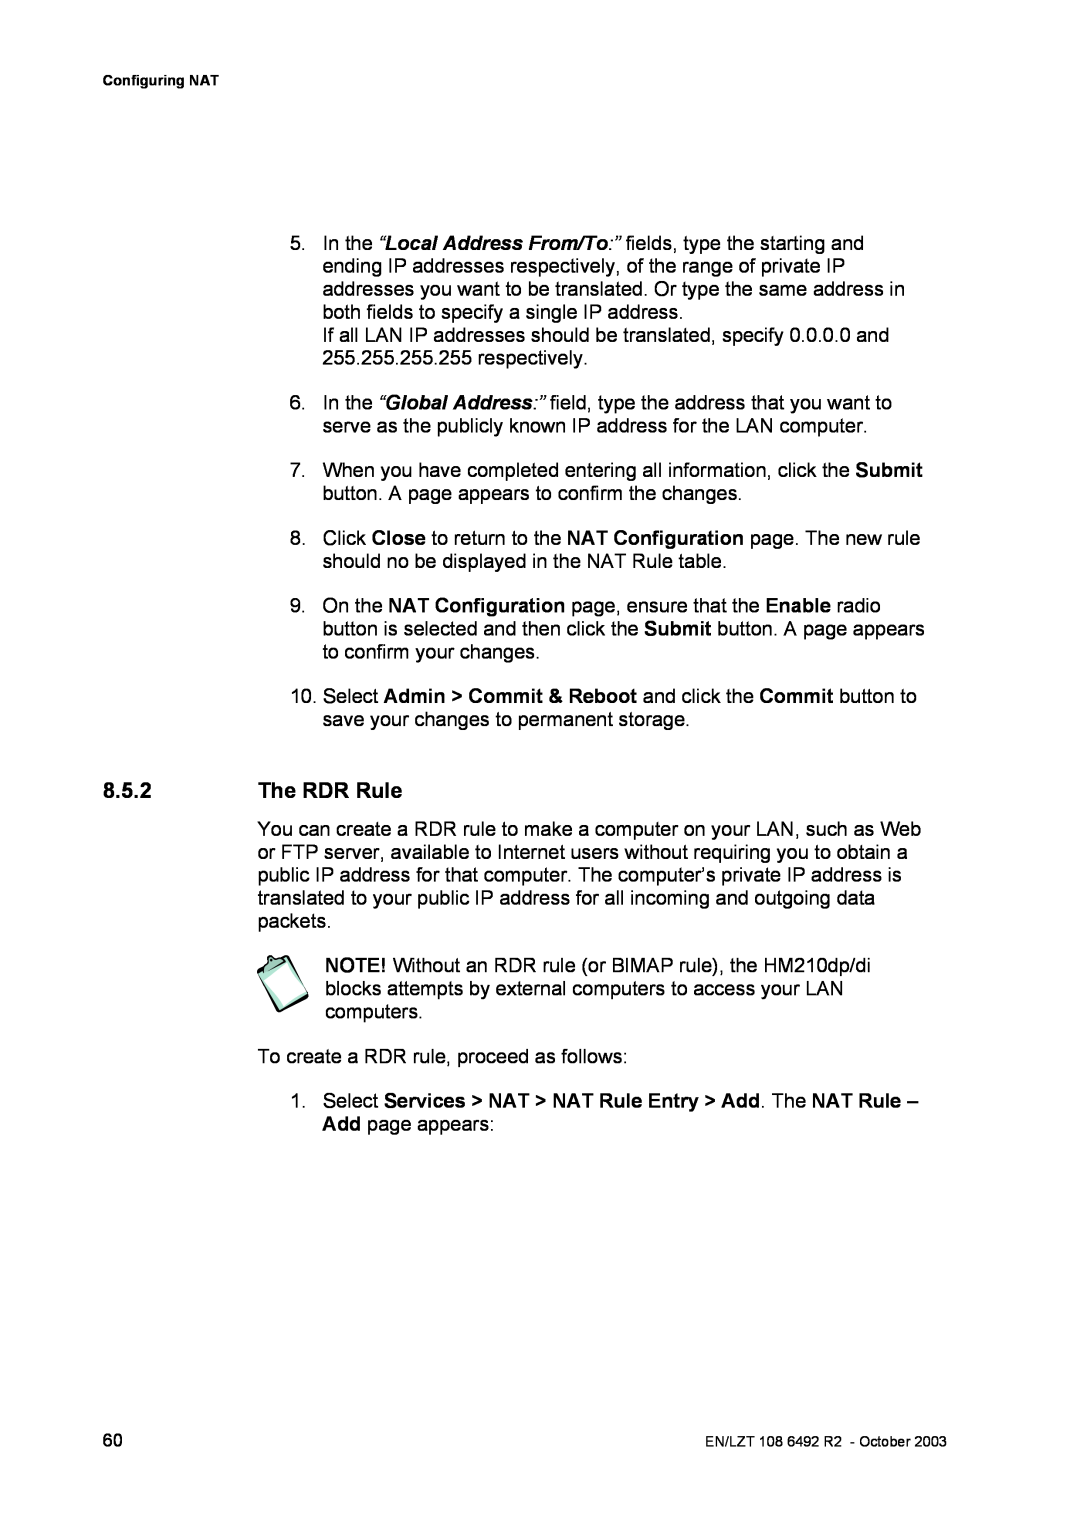 Garmin HM210DP/DI manual The RDR Rule 